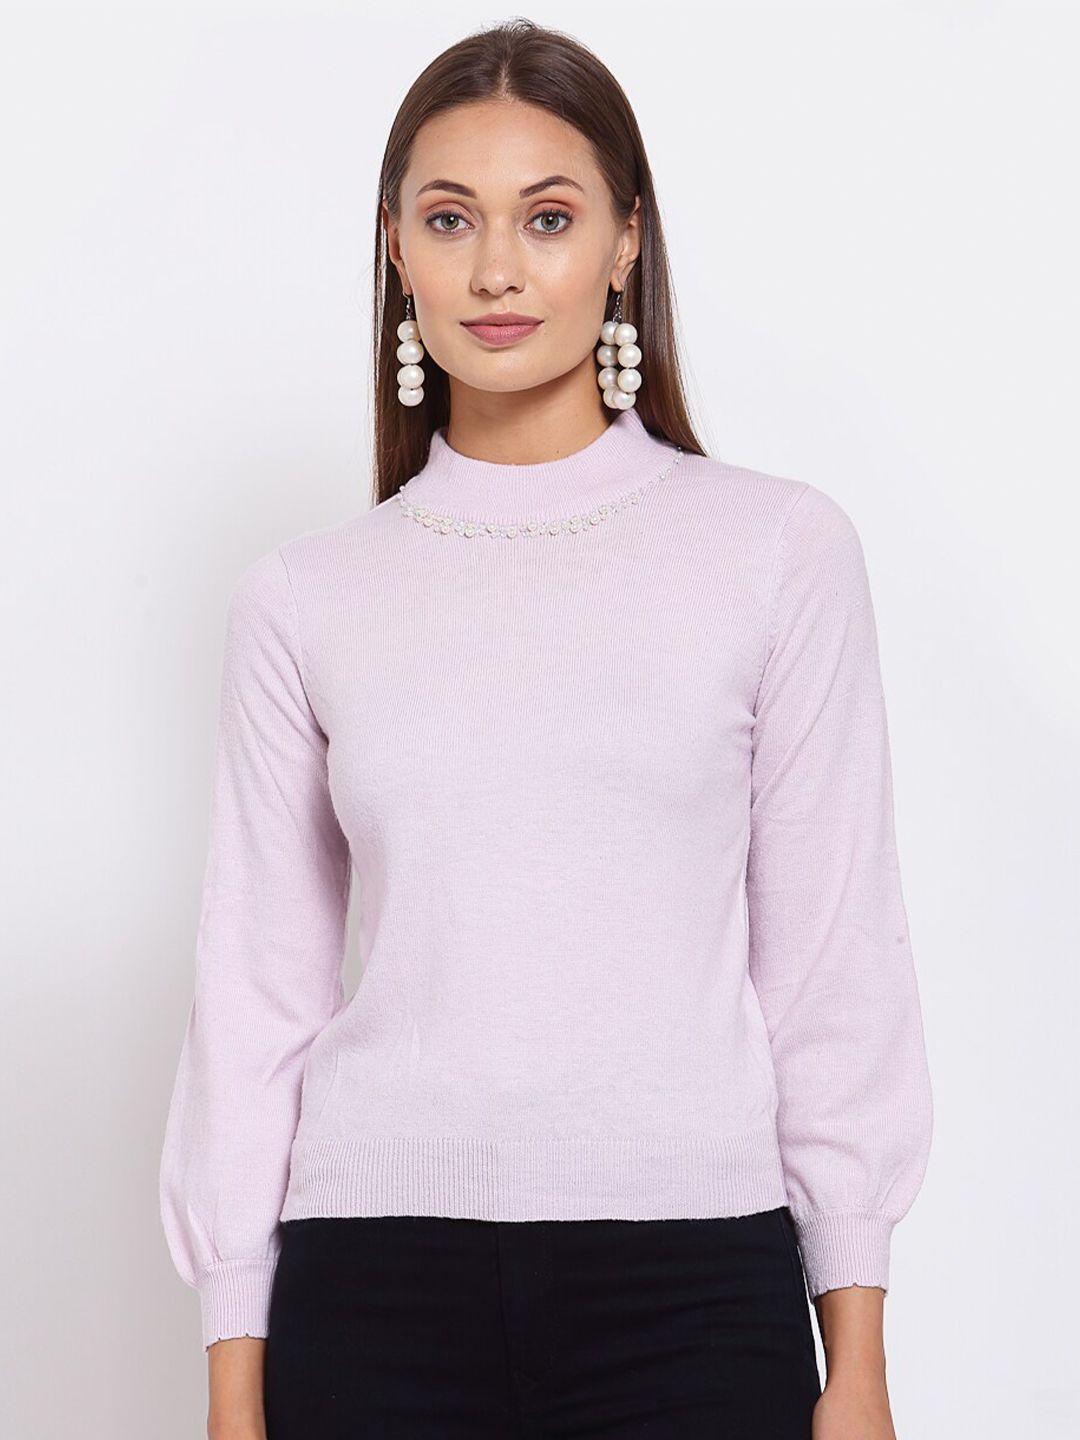 klotthe-women-pink-woolen-pullover-sweater